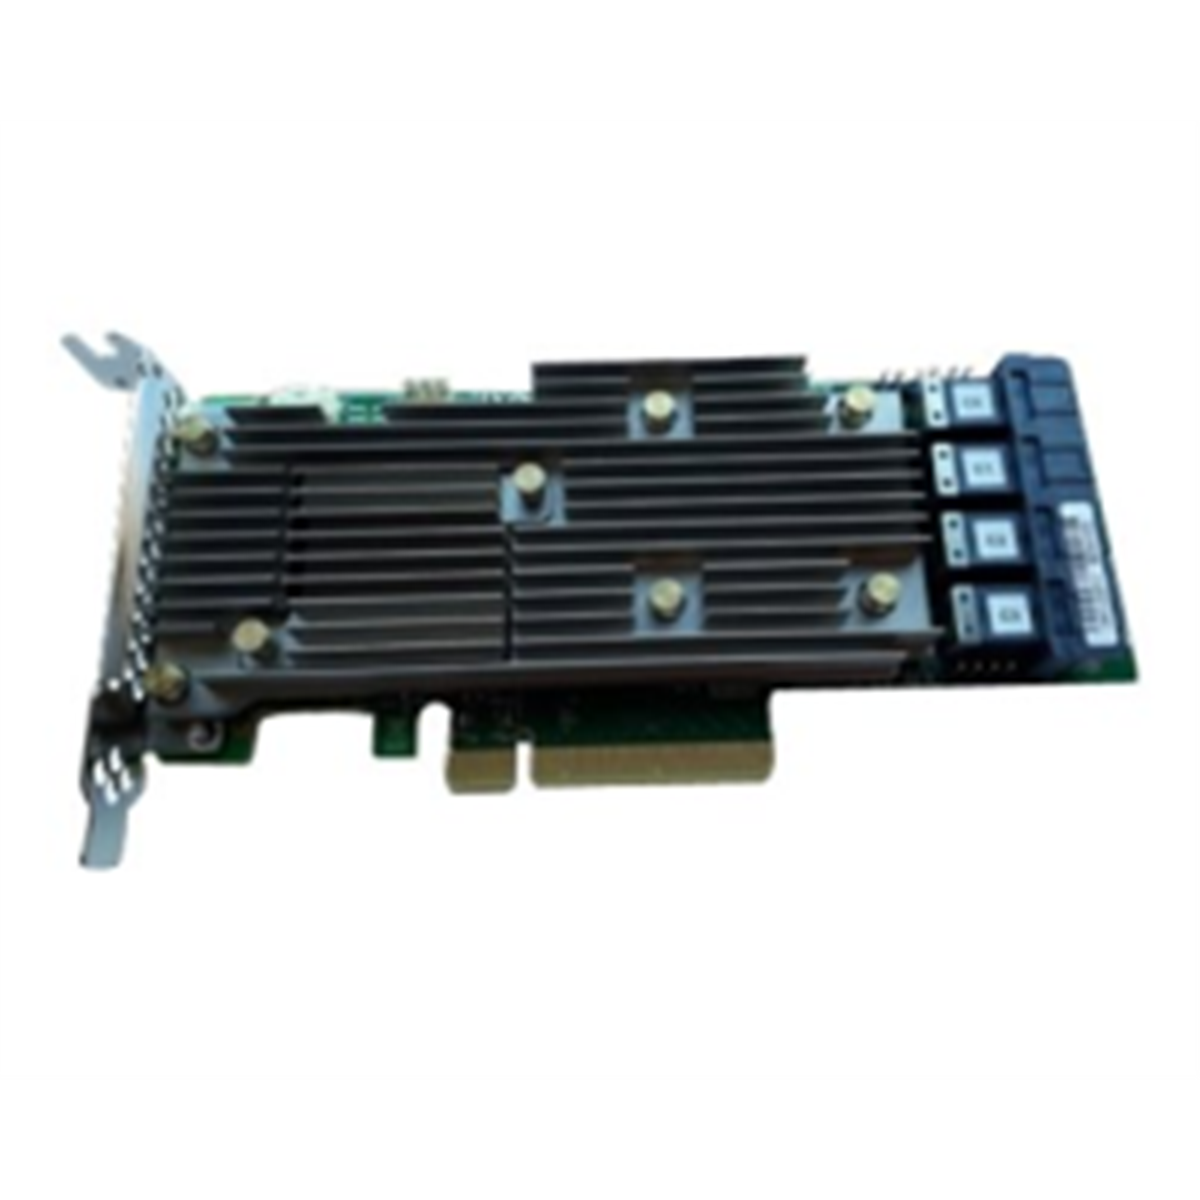 Fujitsu PRAID EP540i - Storage controller (RAID)